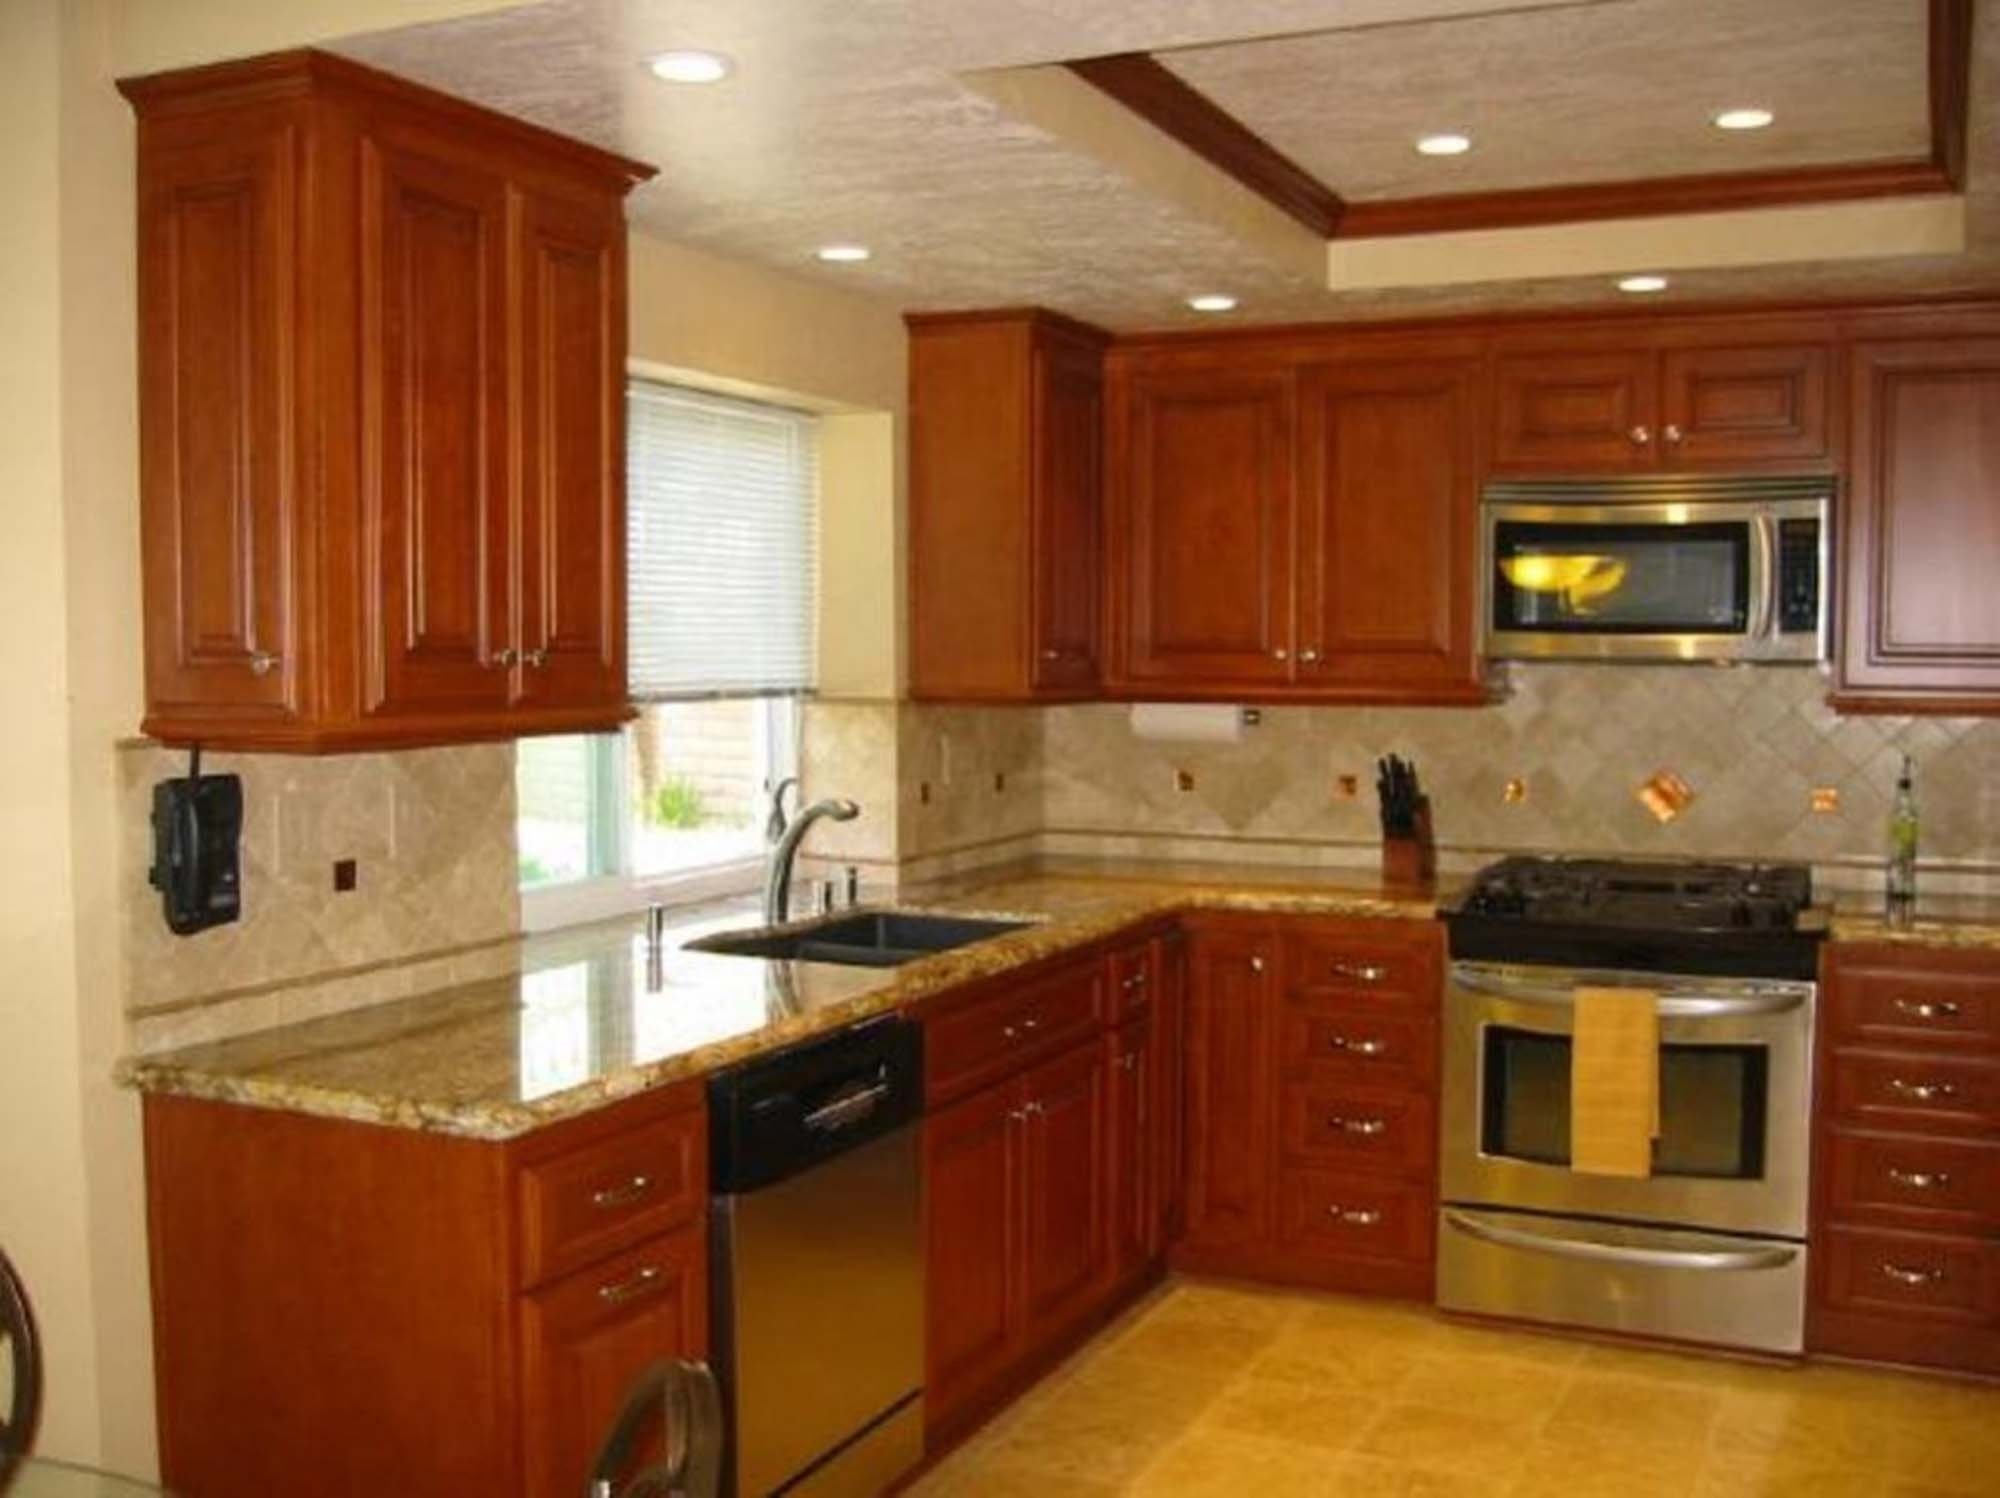 10 Nice Kitchen Paint Color Ideas With Oak Cabinets kitchen kitchen ideas decorating house design luxury interior 2022